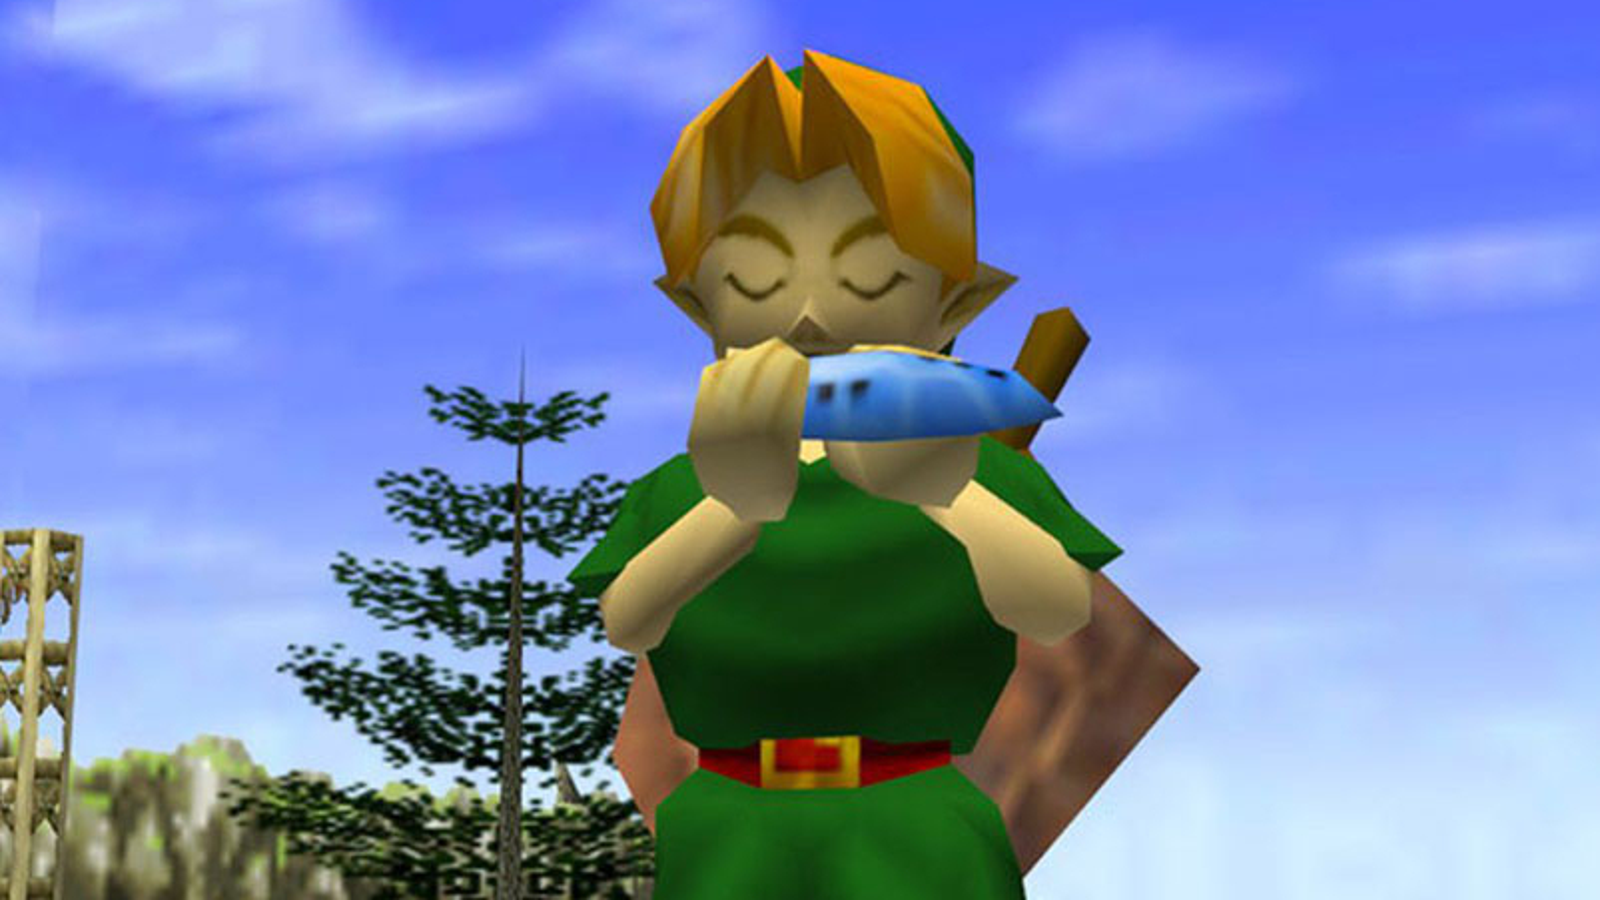 Nintendo Switch Online update improves Zelda: Ocarina of Time performance